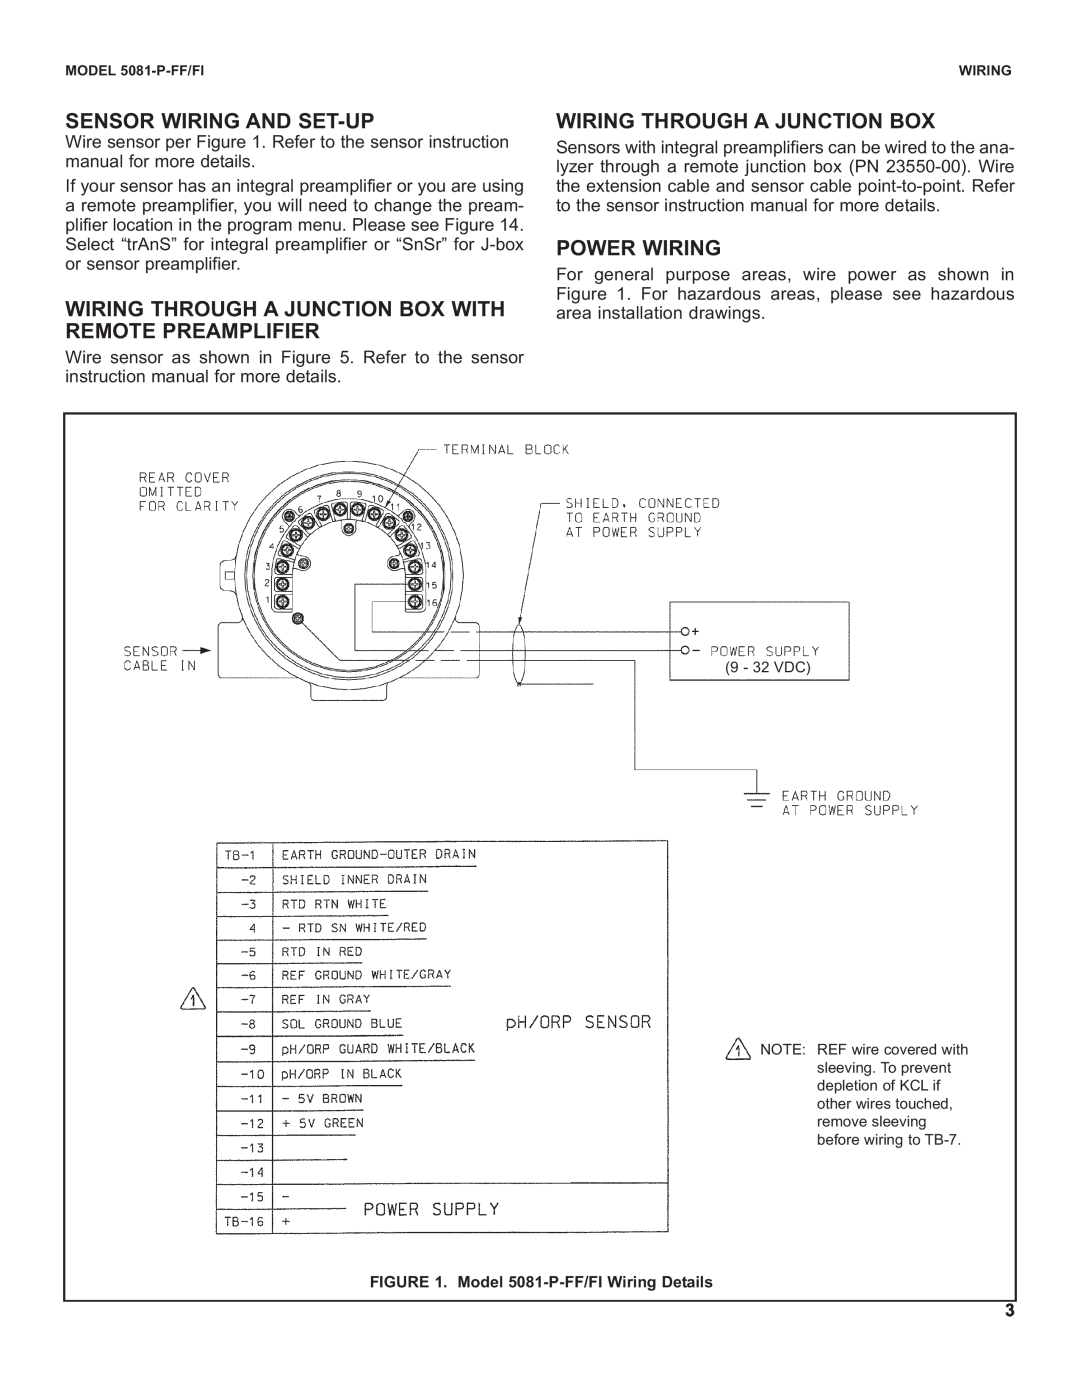 Emerson 5081-P-FF/FI instruction sheet Sensor Wiring And Set-Up, Wiring Through A Junction Box, Power Wiring 